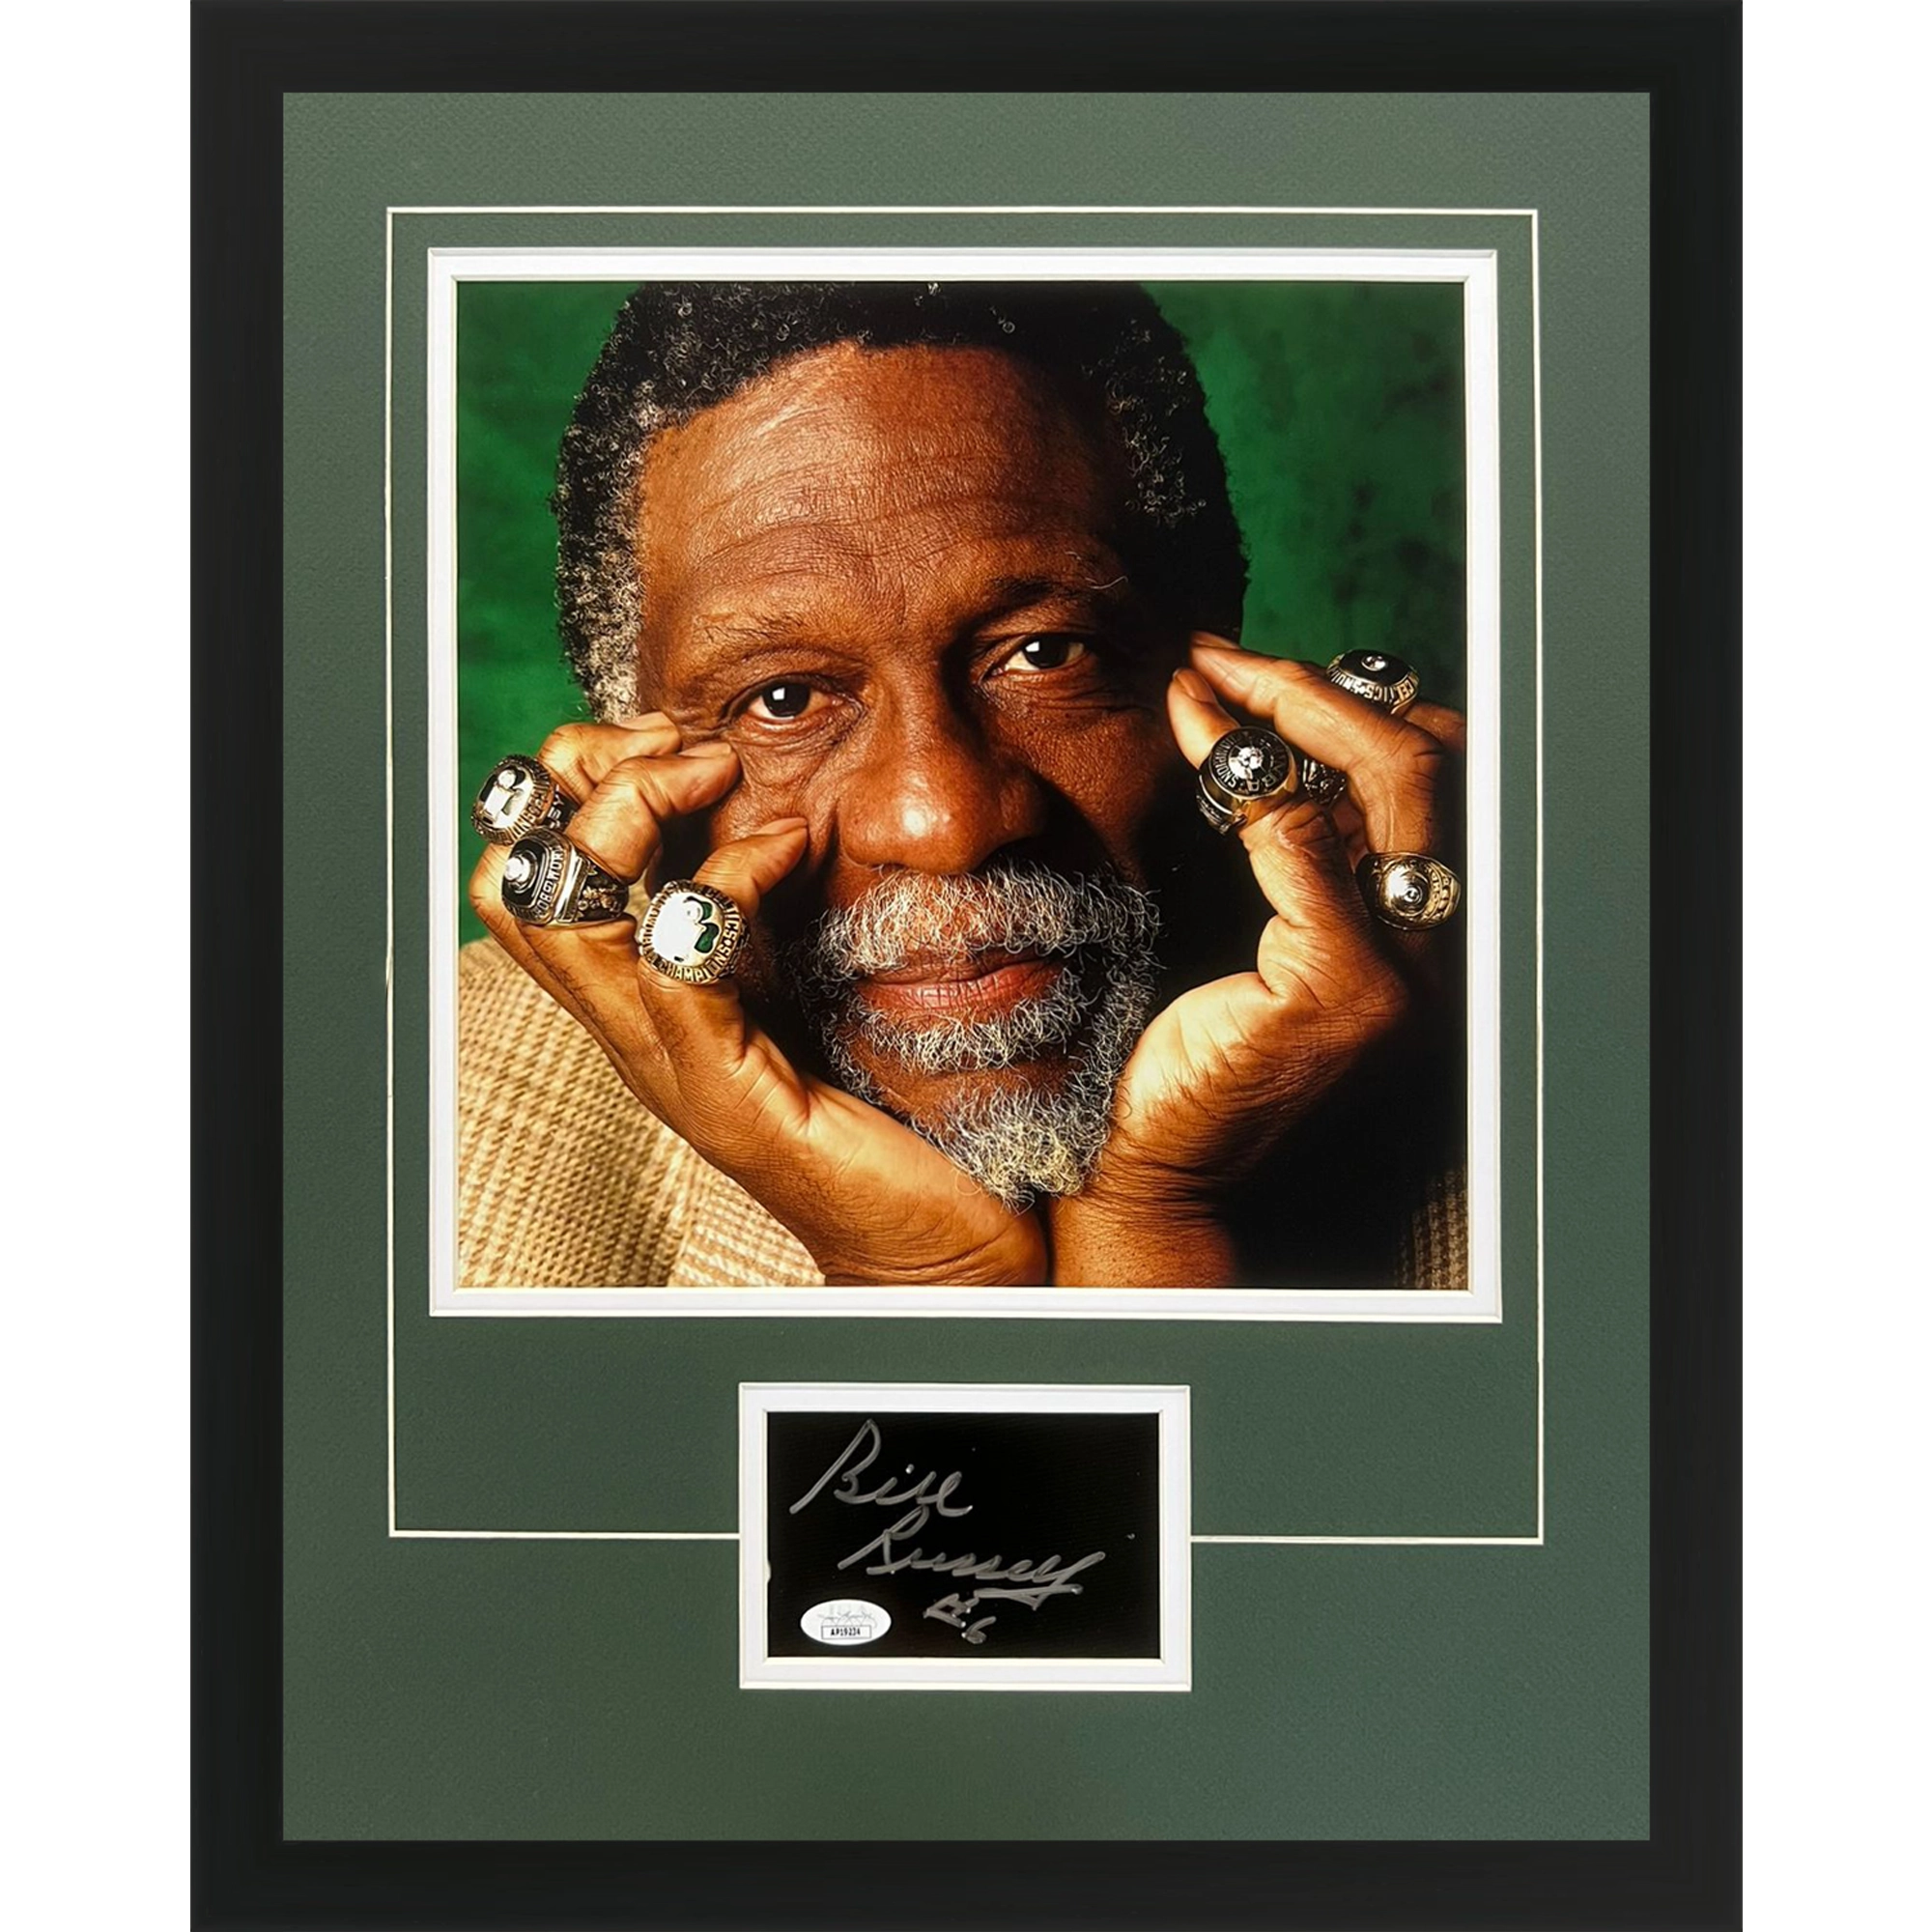 Bill Russell Autographed Boston Celtics (Rings) Deluxe Framed 12x12 Photo Piece - JSA